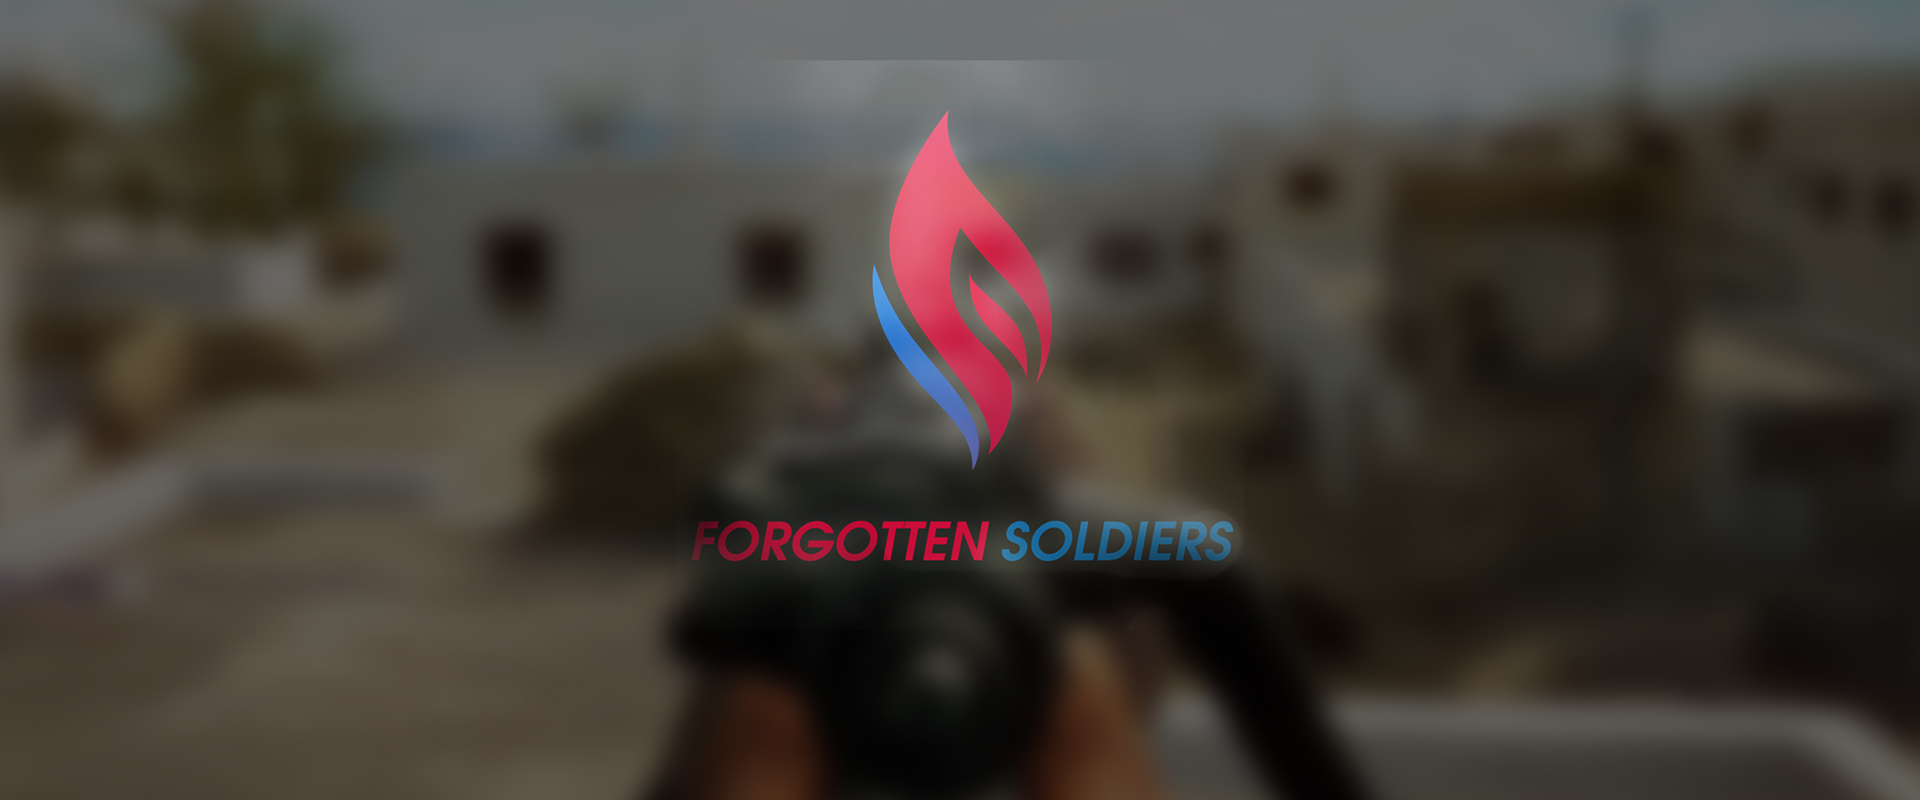 Magyarokkal jön hétvégén a Forgotten Soldiers CoD2 LAN